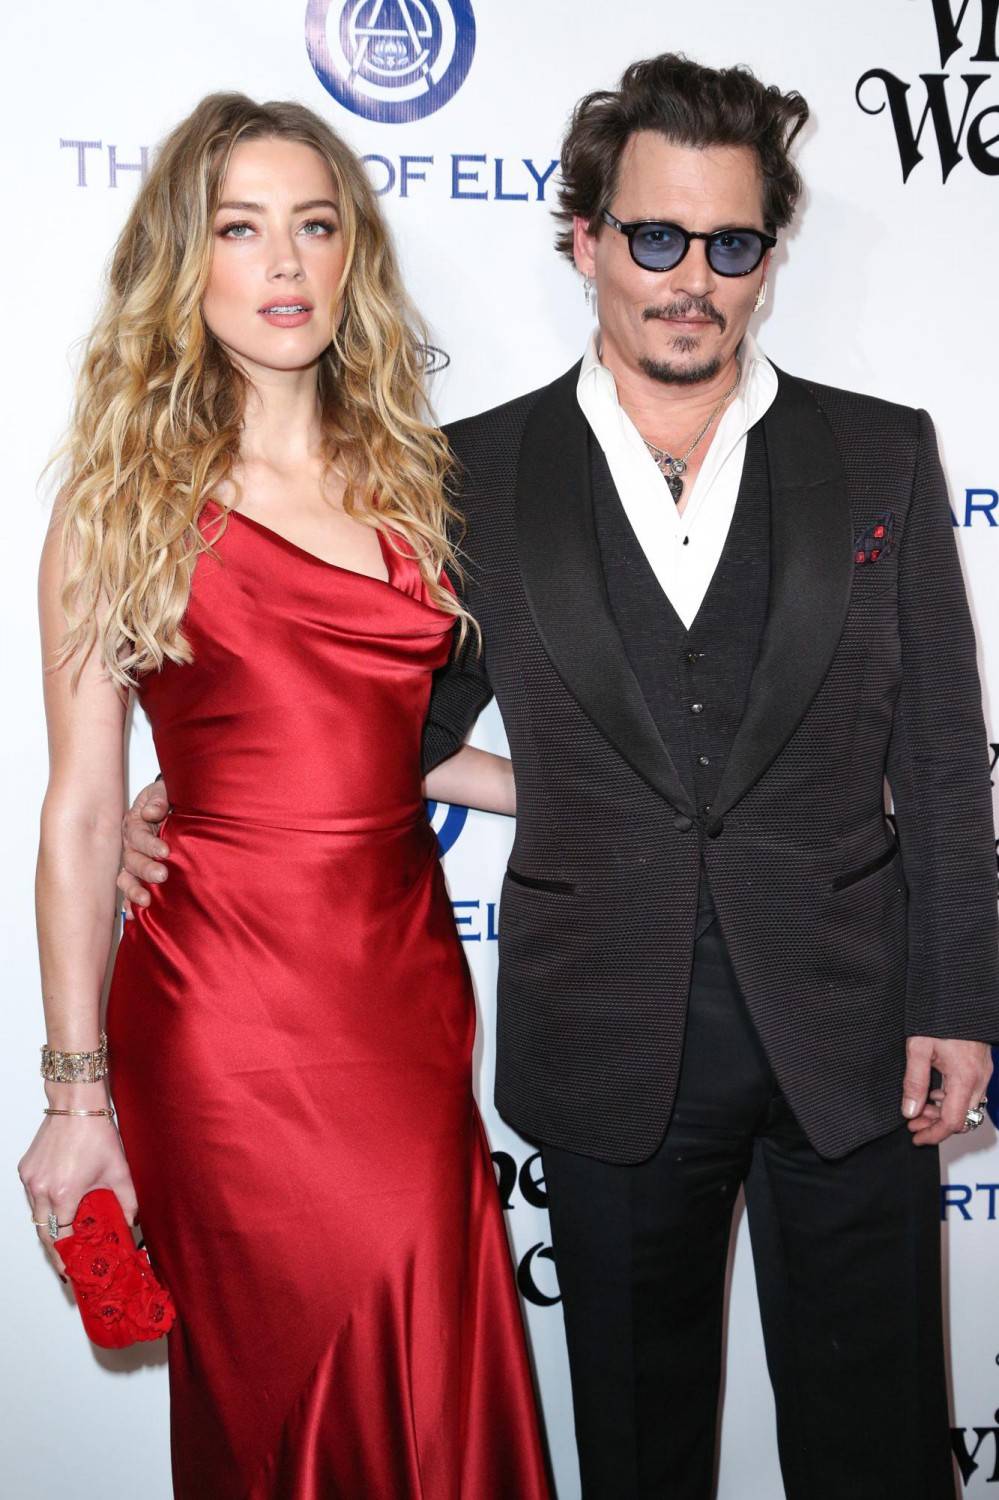 "Amber Heard ha manipolato Johnny Depp": parla l'amico